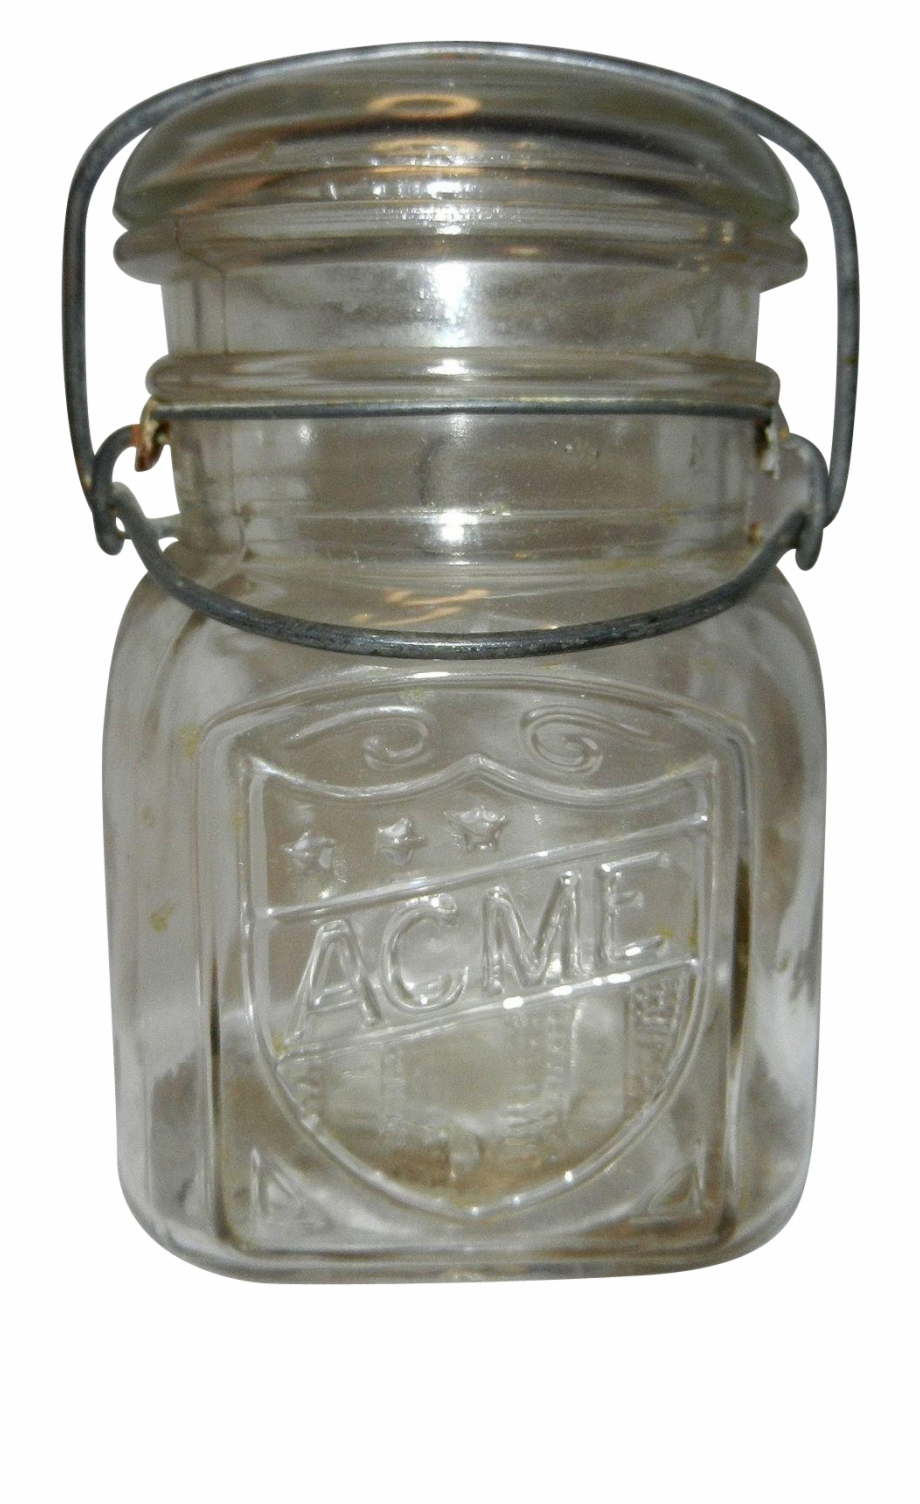 Vintage Acme Fruit Pint Canning Jar Found At